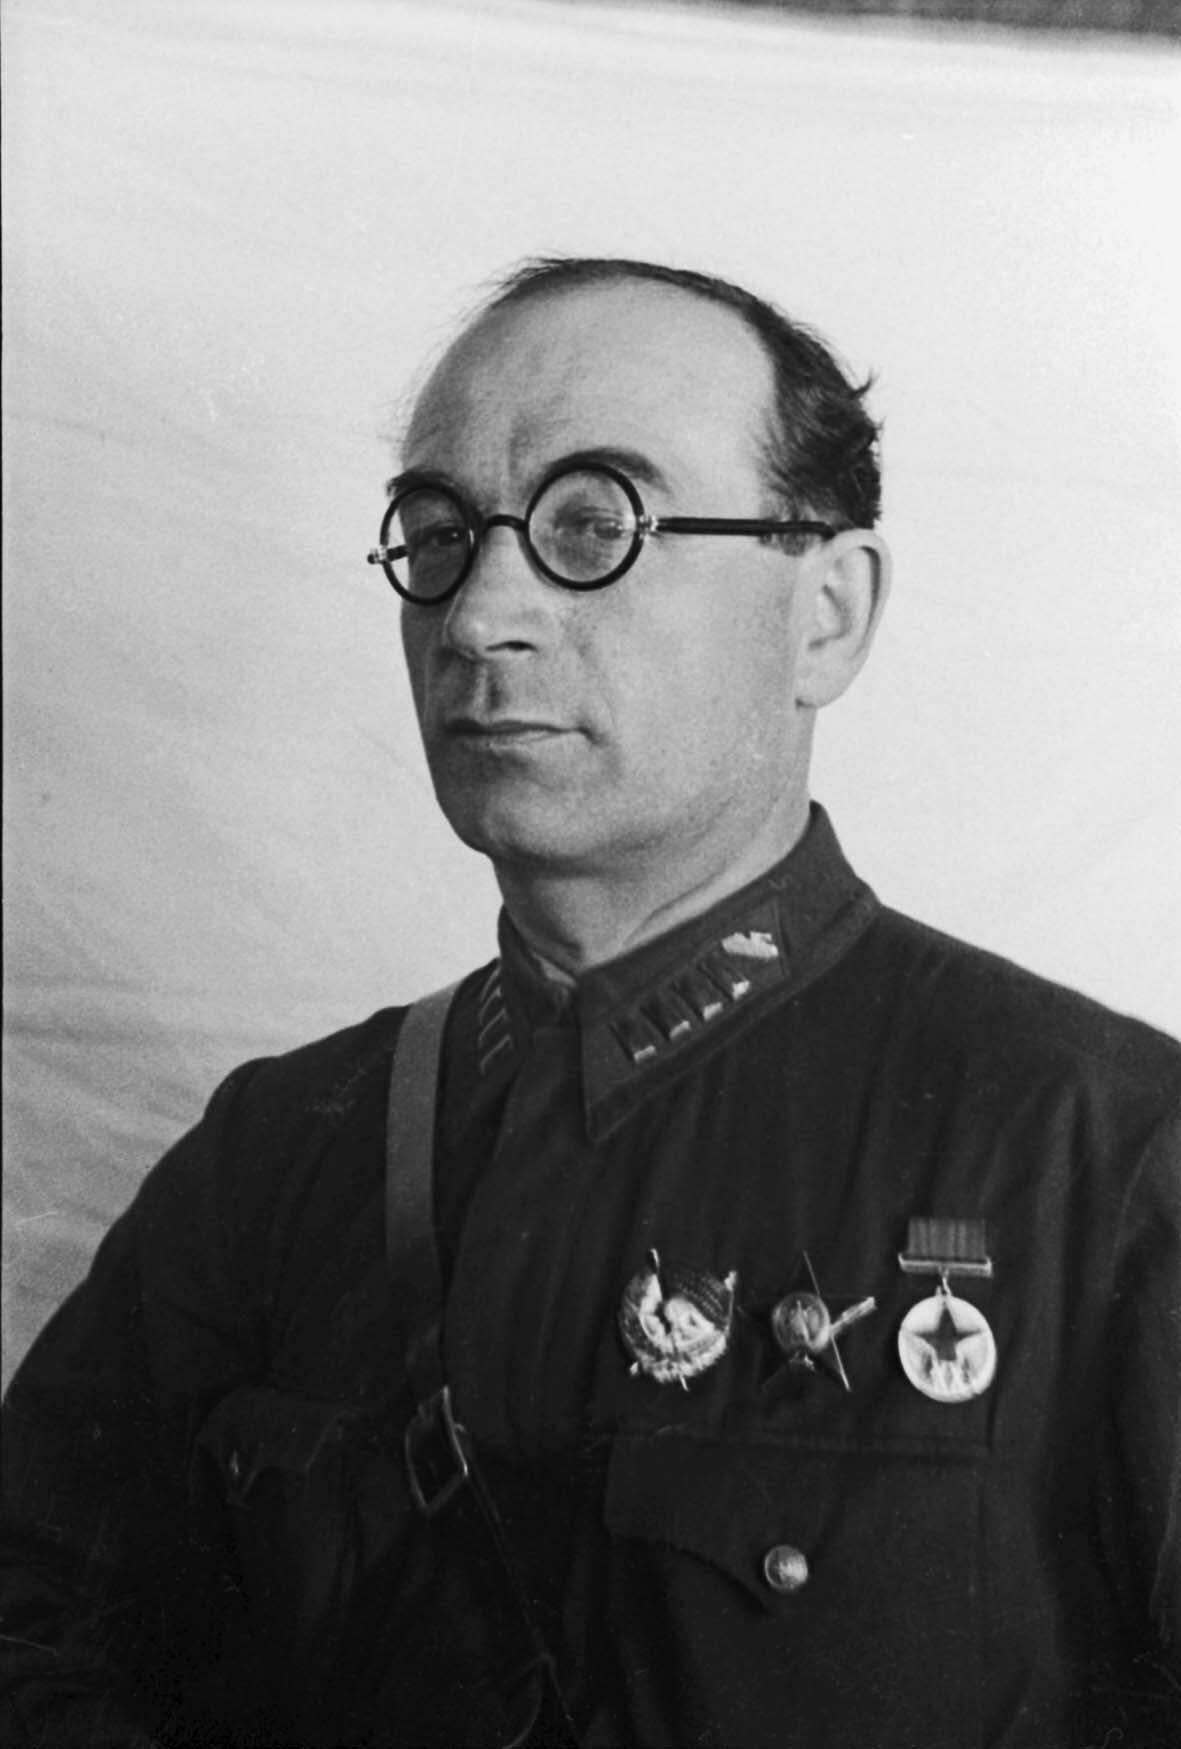 Fotografie: Kommandeur der 3. Gardepanzerbrigade, Kalininer Front, 11. März 1942 (Museum Berlin-Karlshorst RR-P)